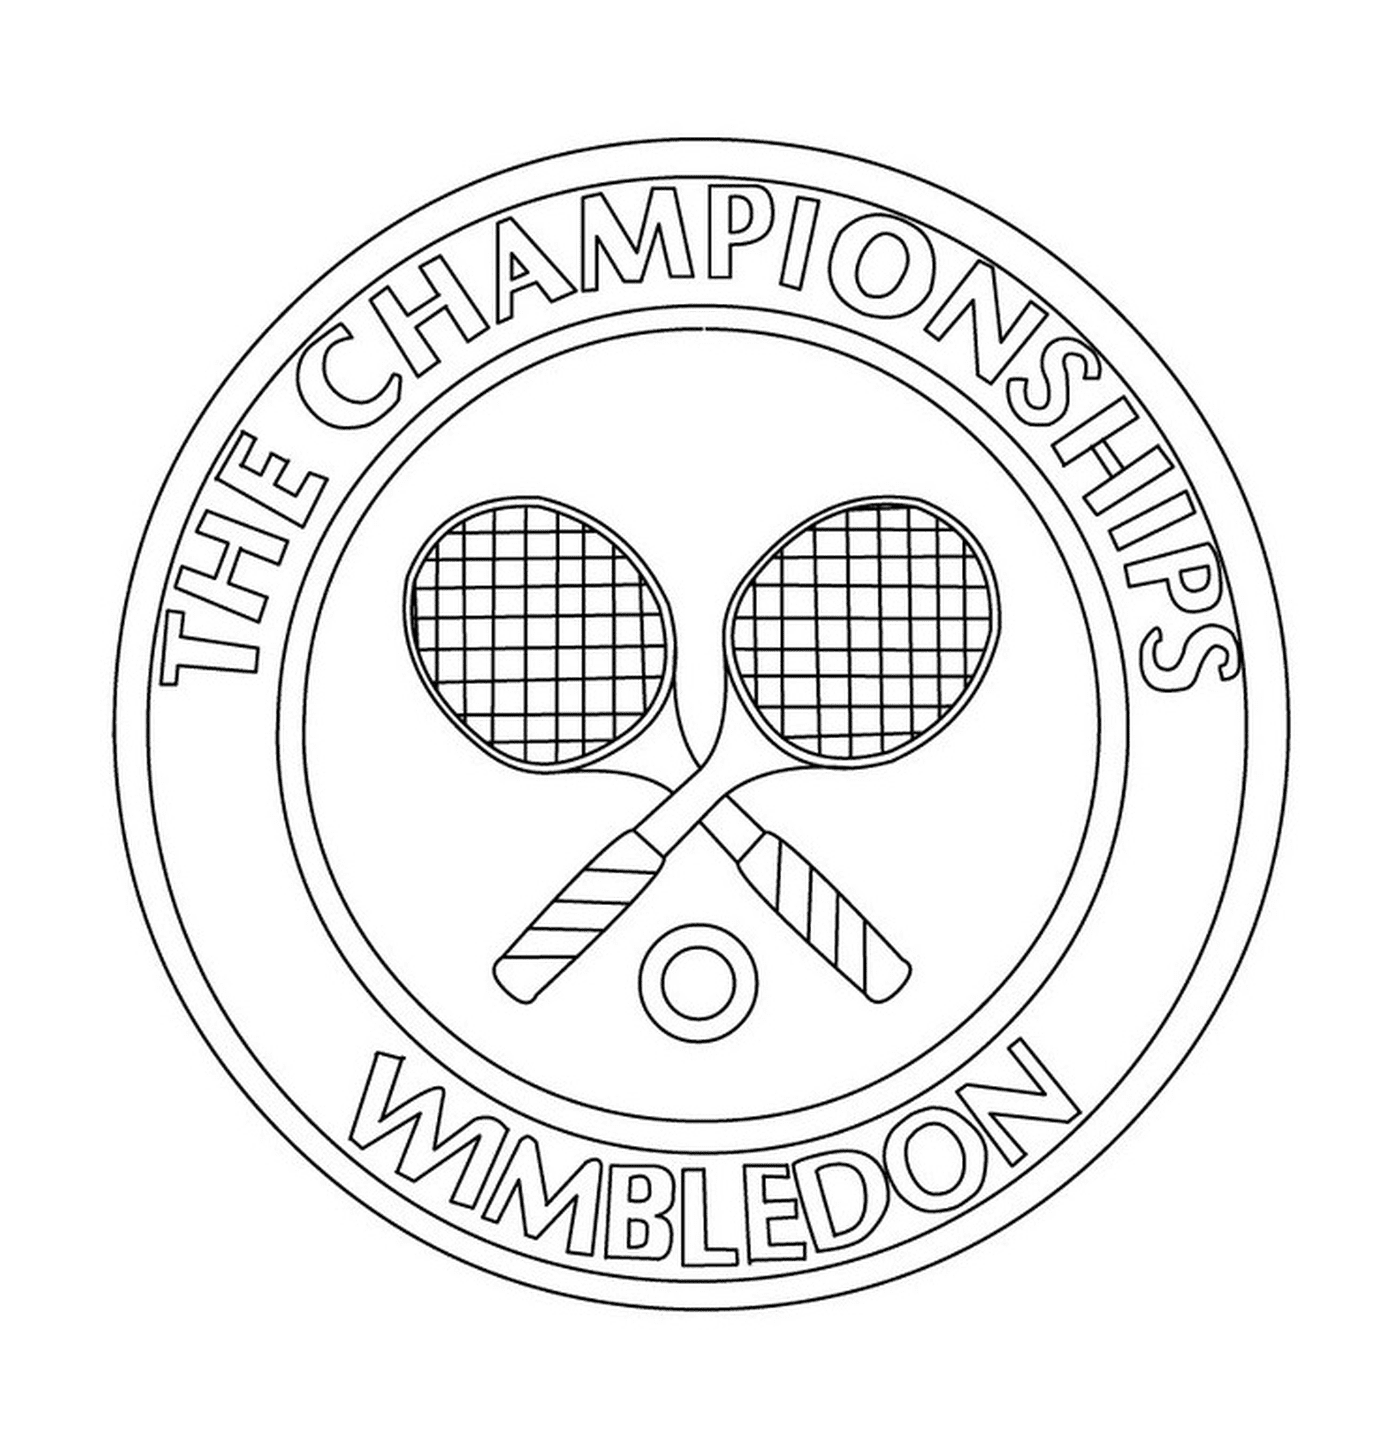  Logotipo do tênis The Championships Wimbledon 